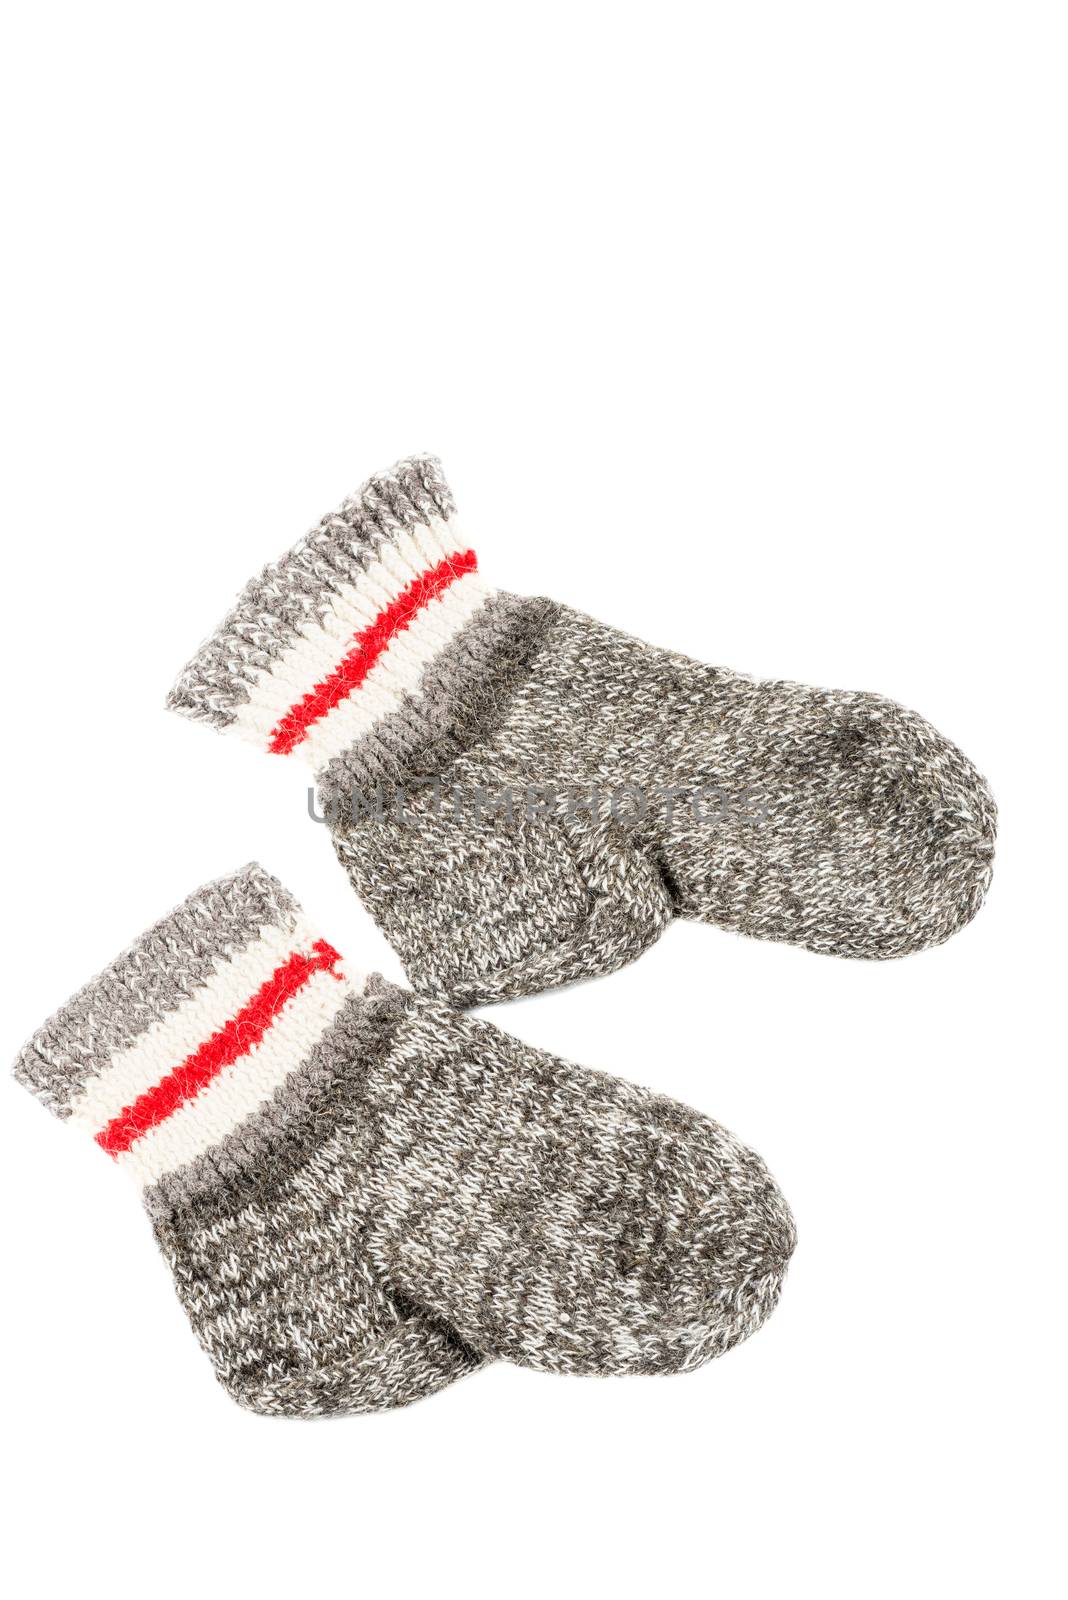 Homemade wool socks isolated on white background